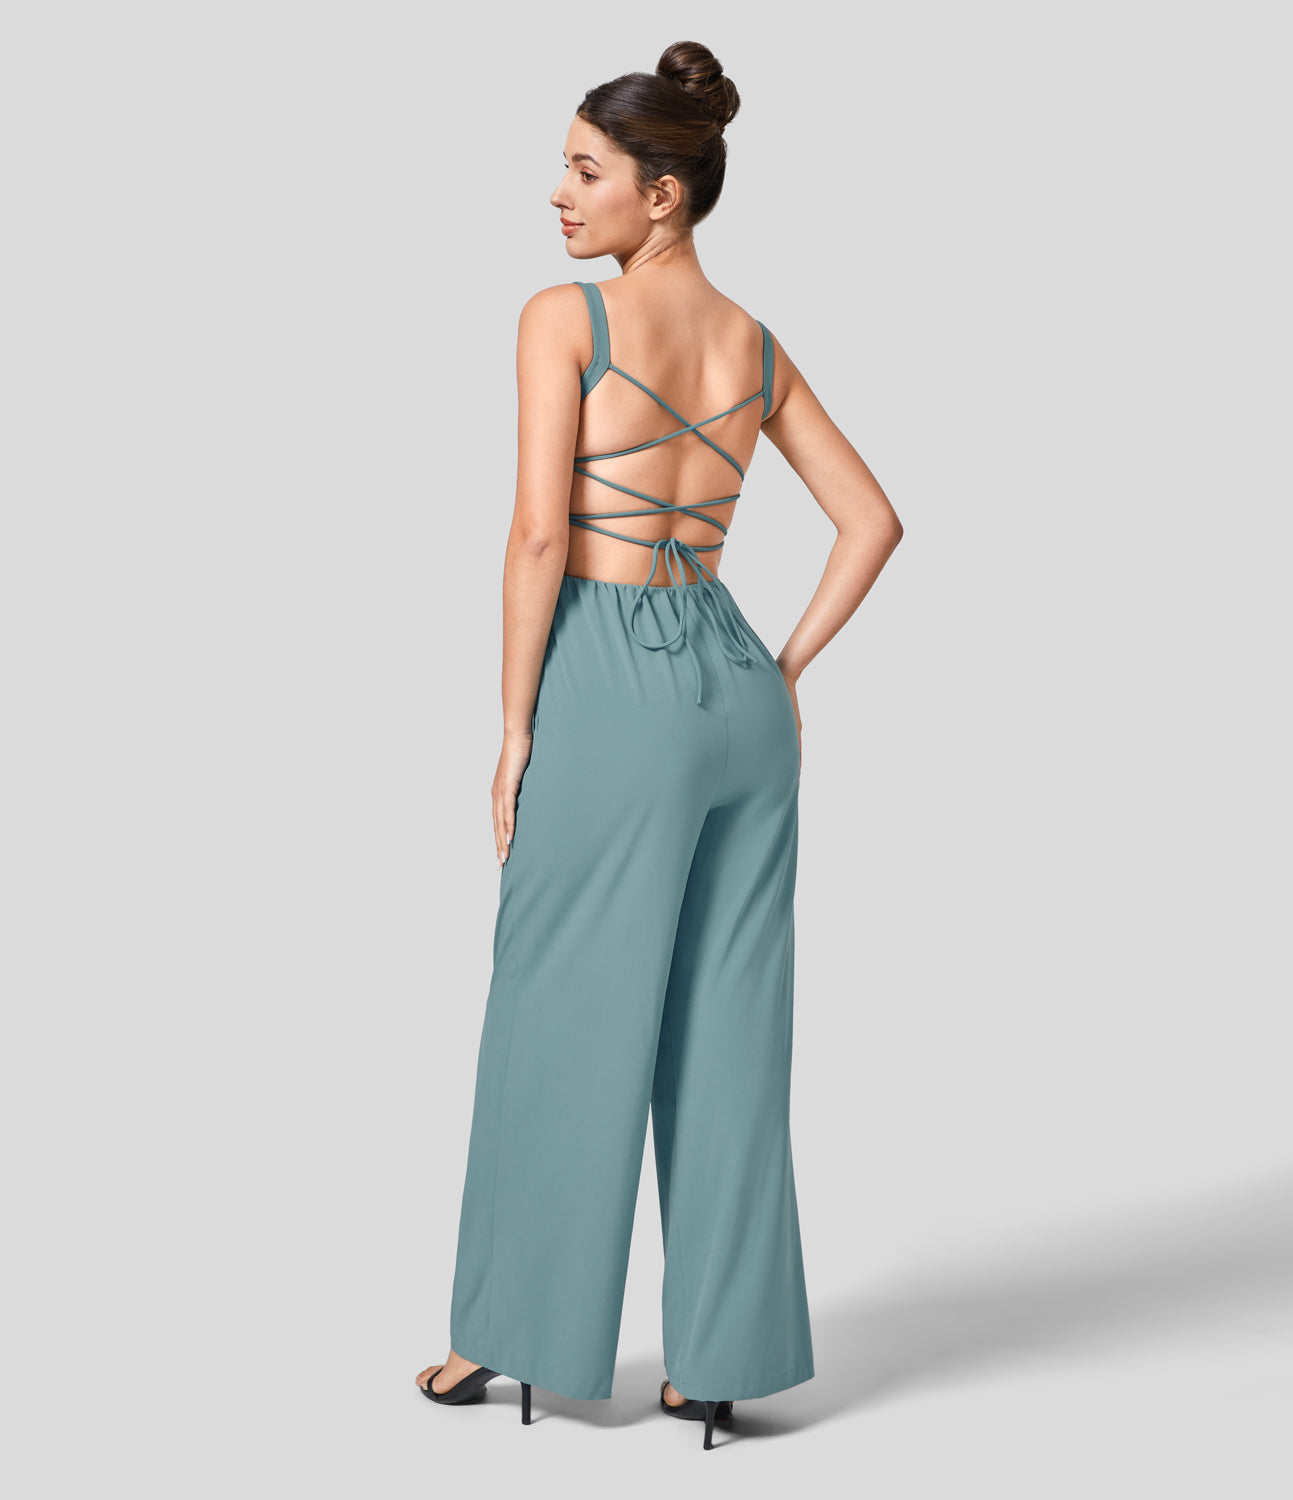 

Halara Breezefulв„ў Backless Crisscross Lace Up Side Pocket Quick Dry Casual Jumpsuit - Amaranth